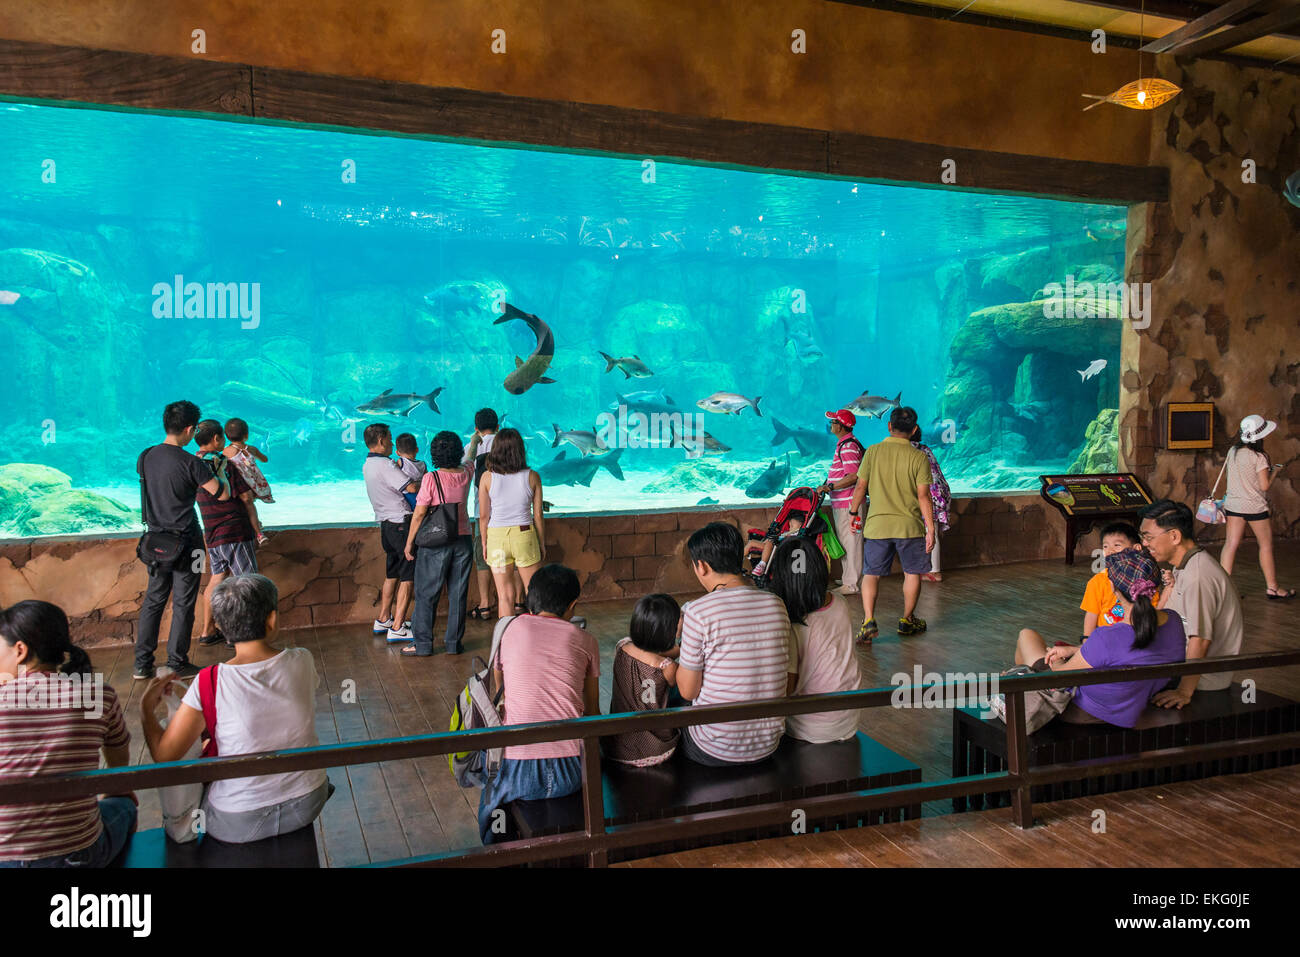 Large aquarium with mekong catfish at Singapore River Safari Park Stock ...